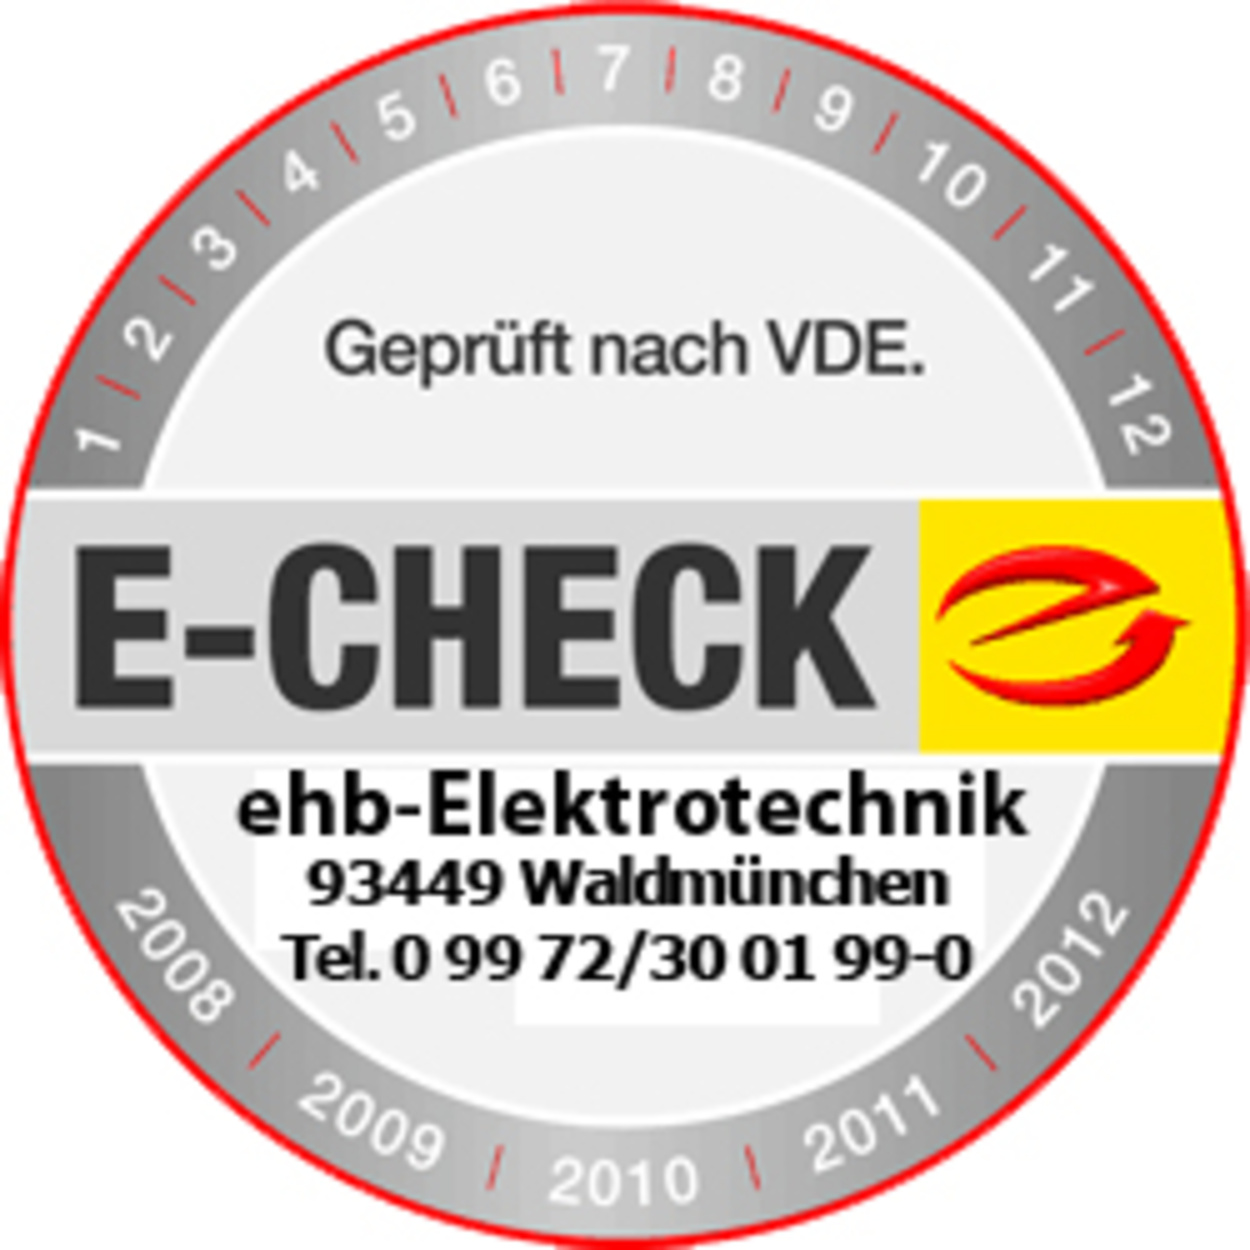 Der E-Check bei ehb-Elektrotechnik in Waldmünchen